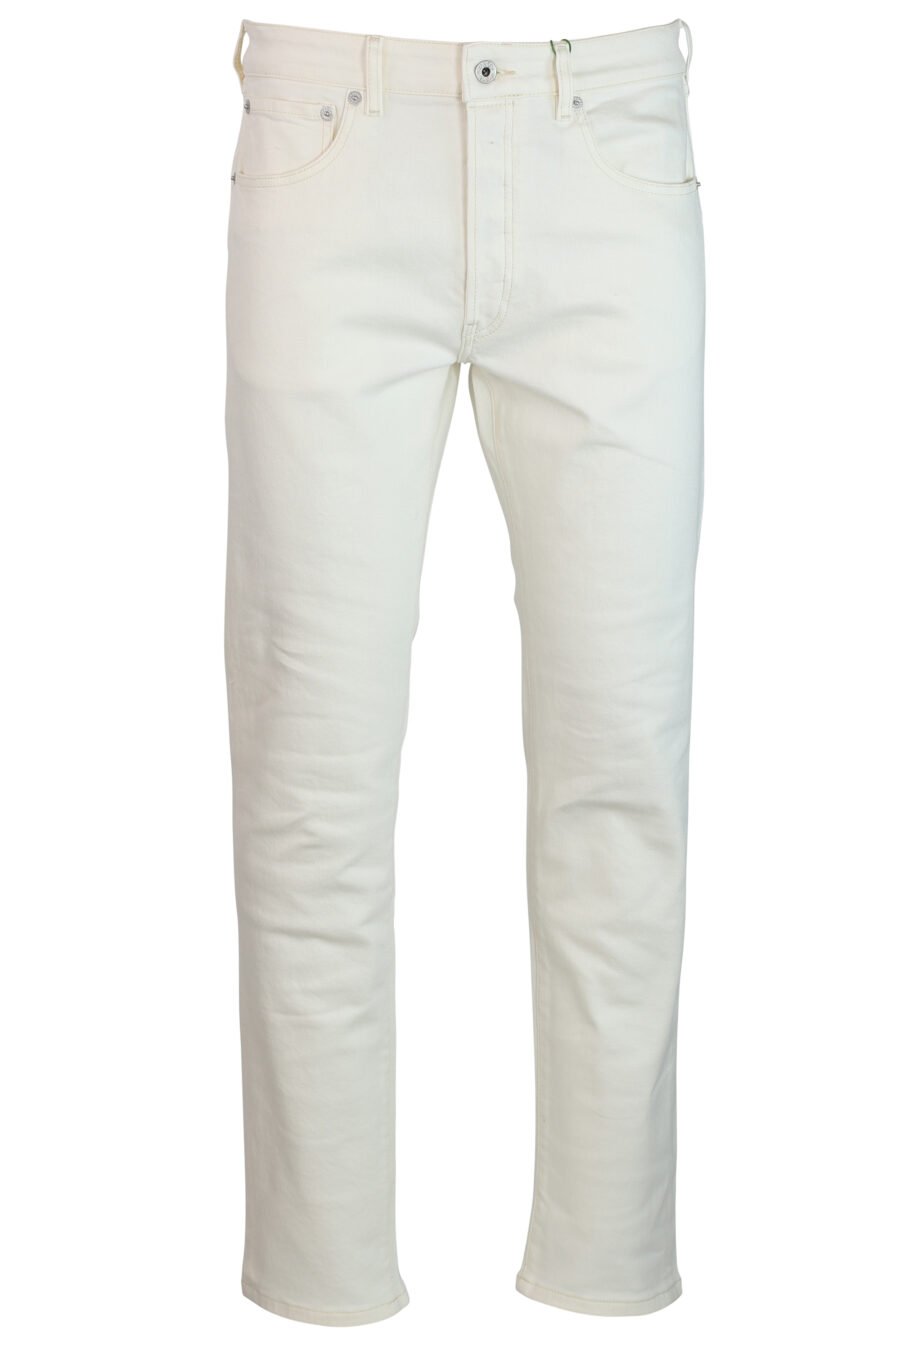 Pantalon en denim blanc avec mini logo - IMG 0290